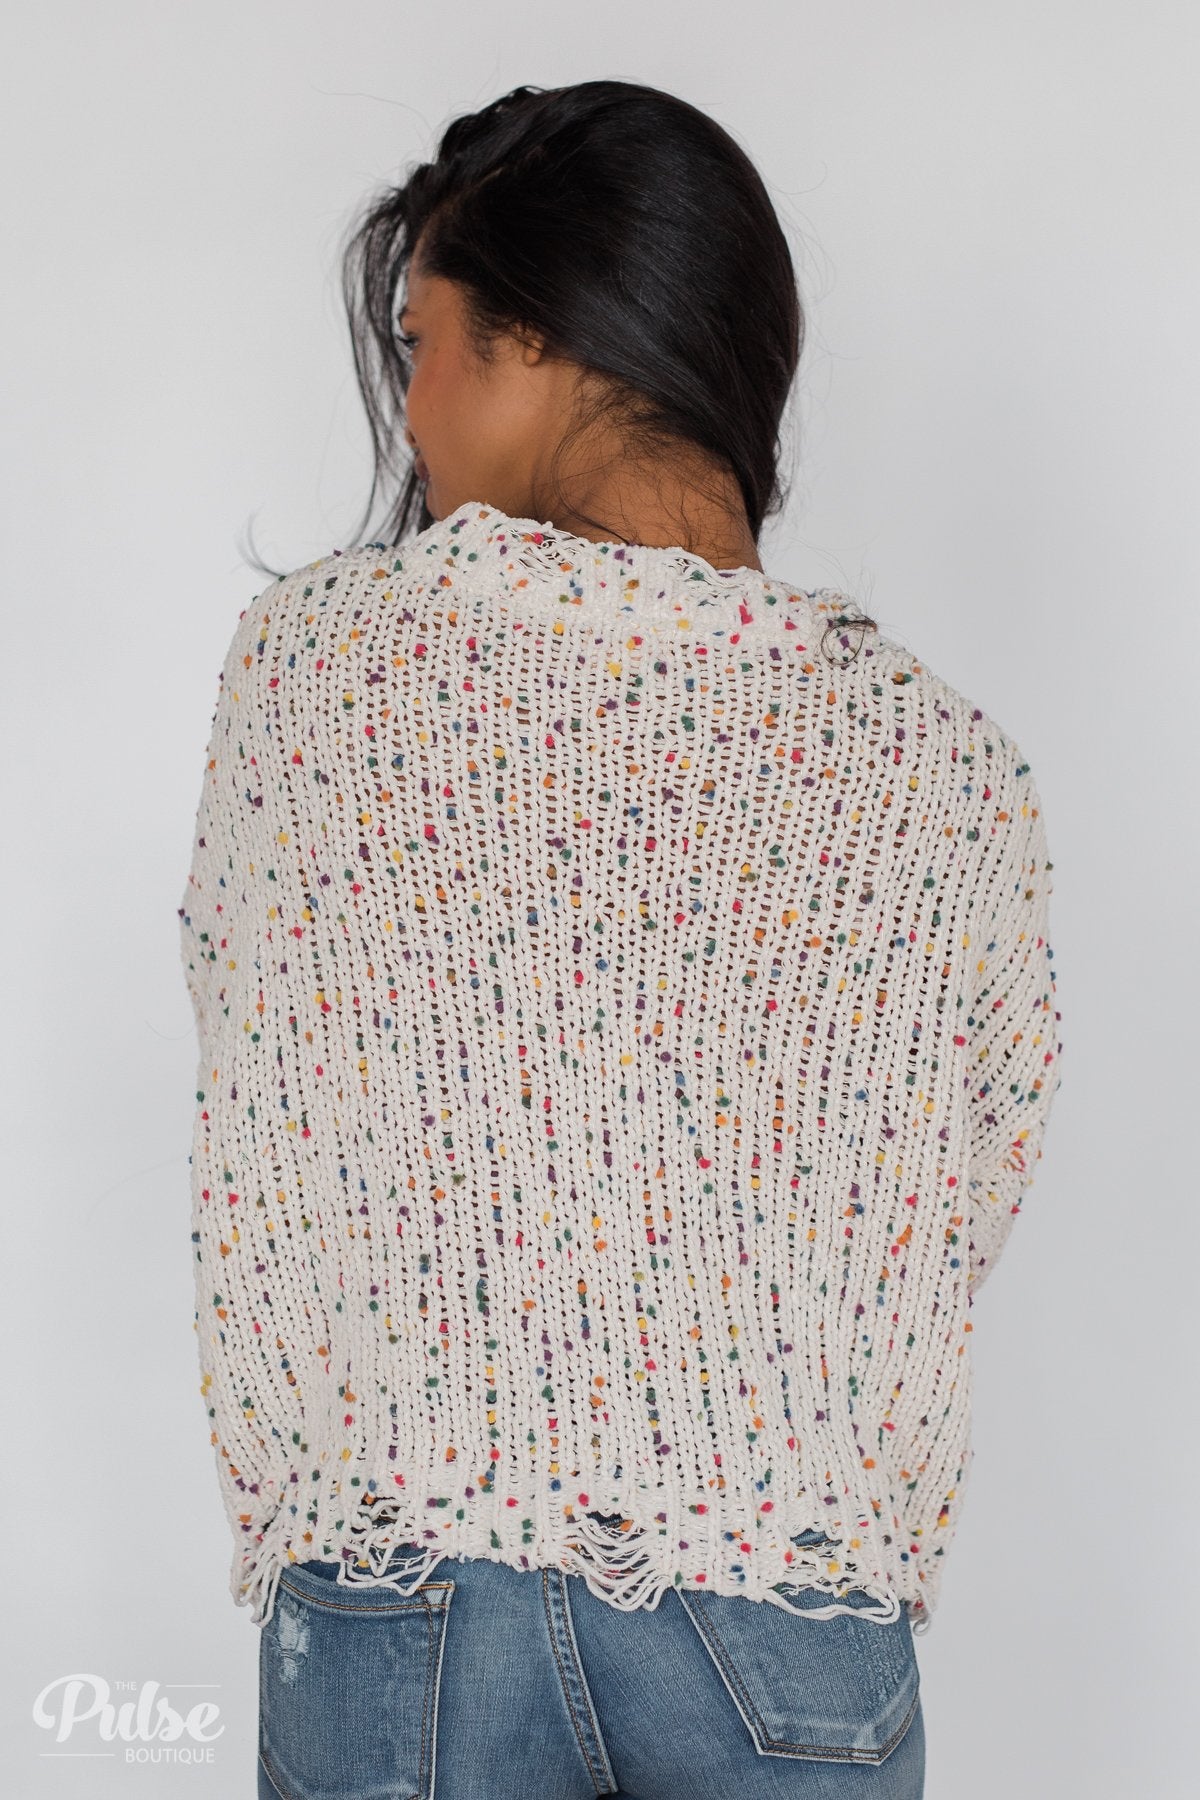 Distressed Confetti Knitted Sweater- Cream